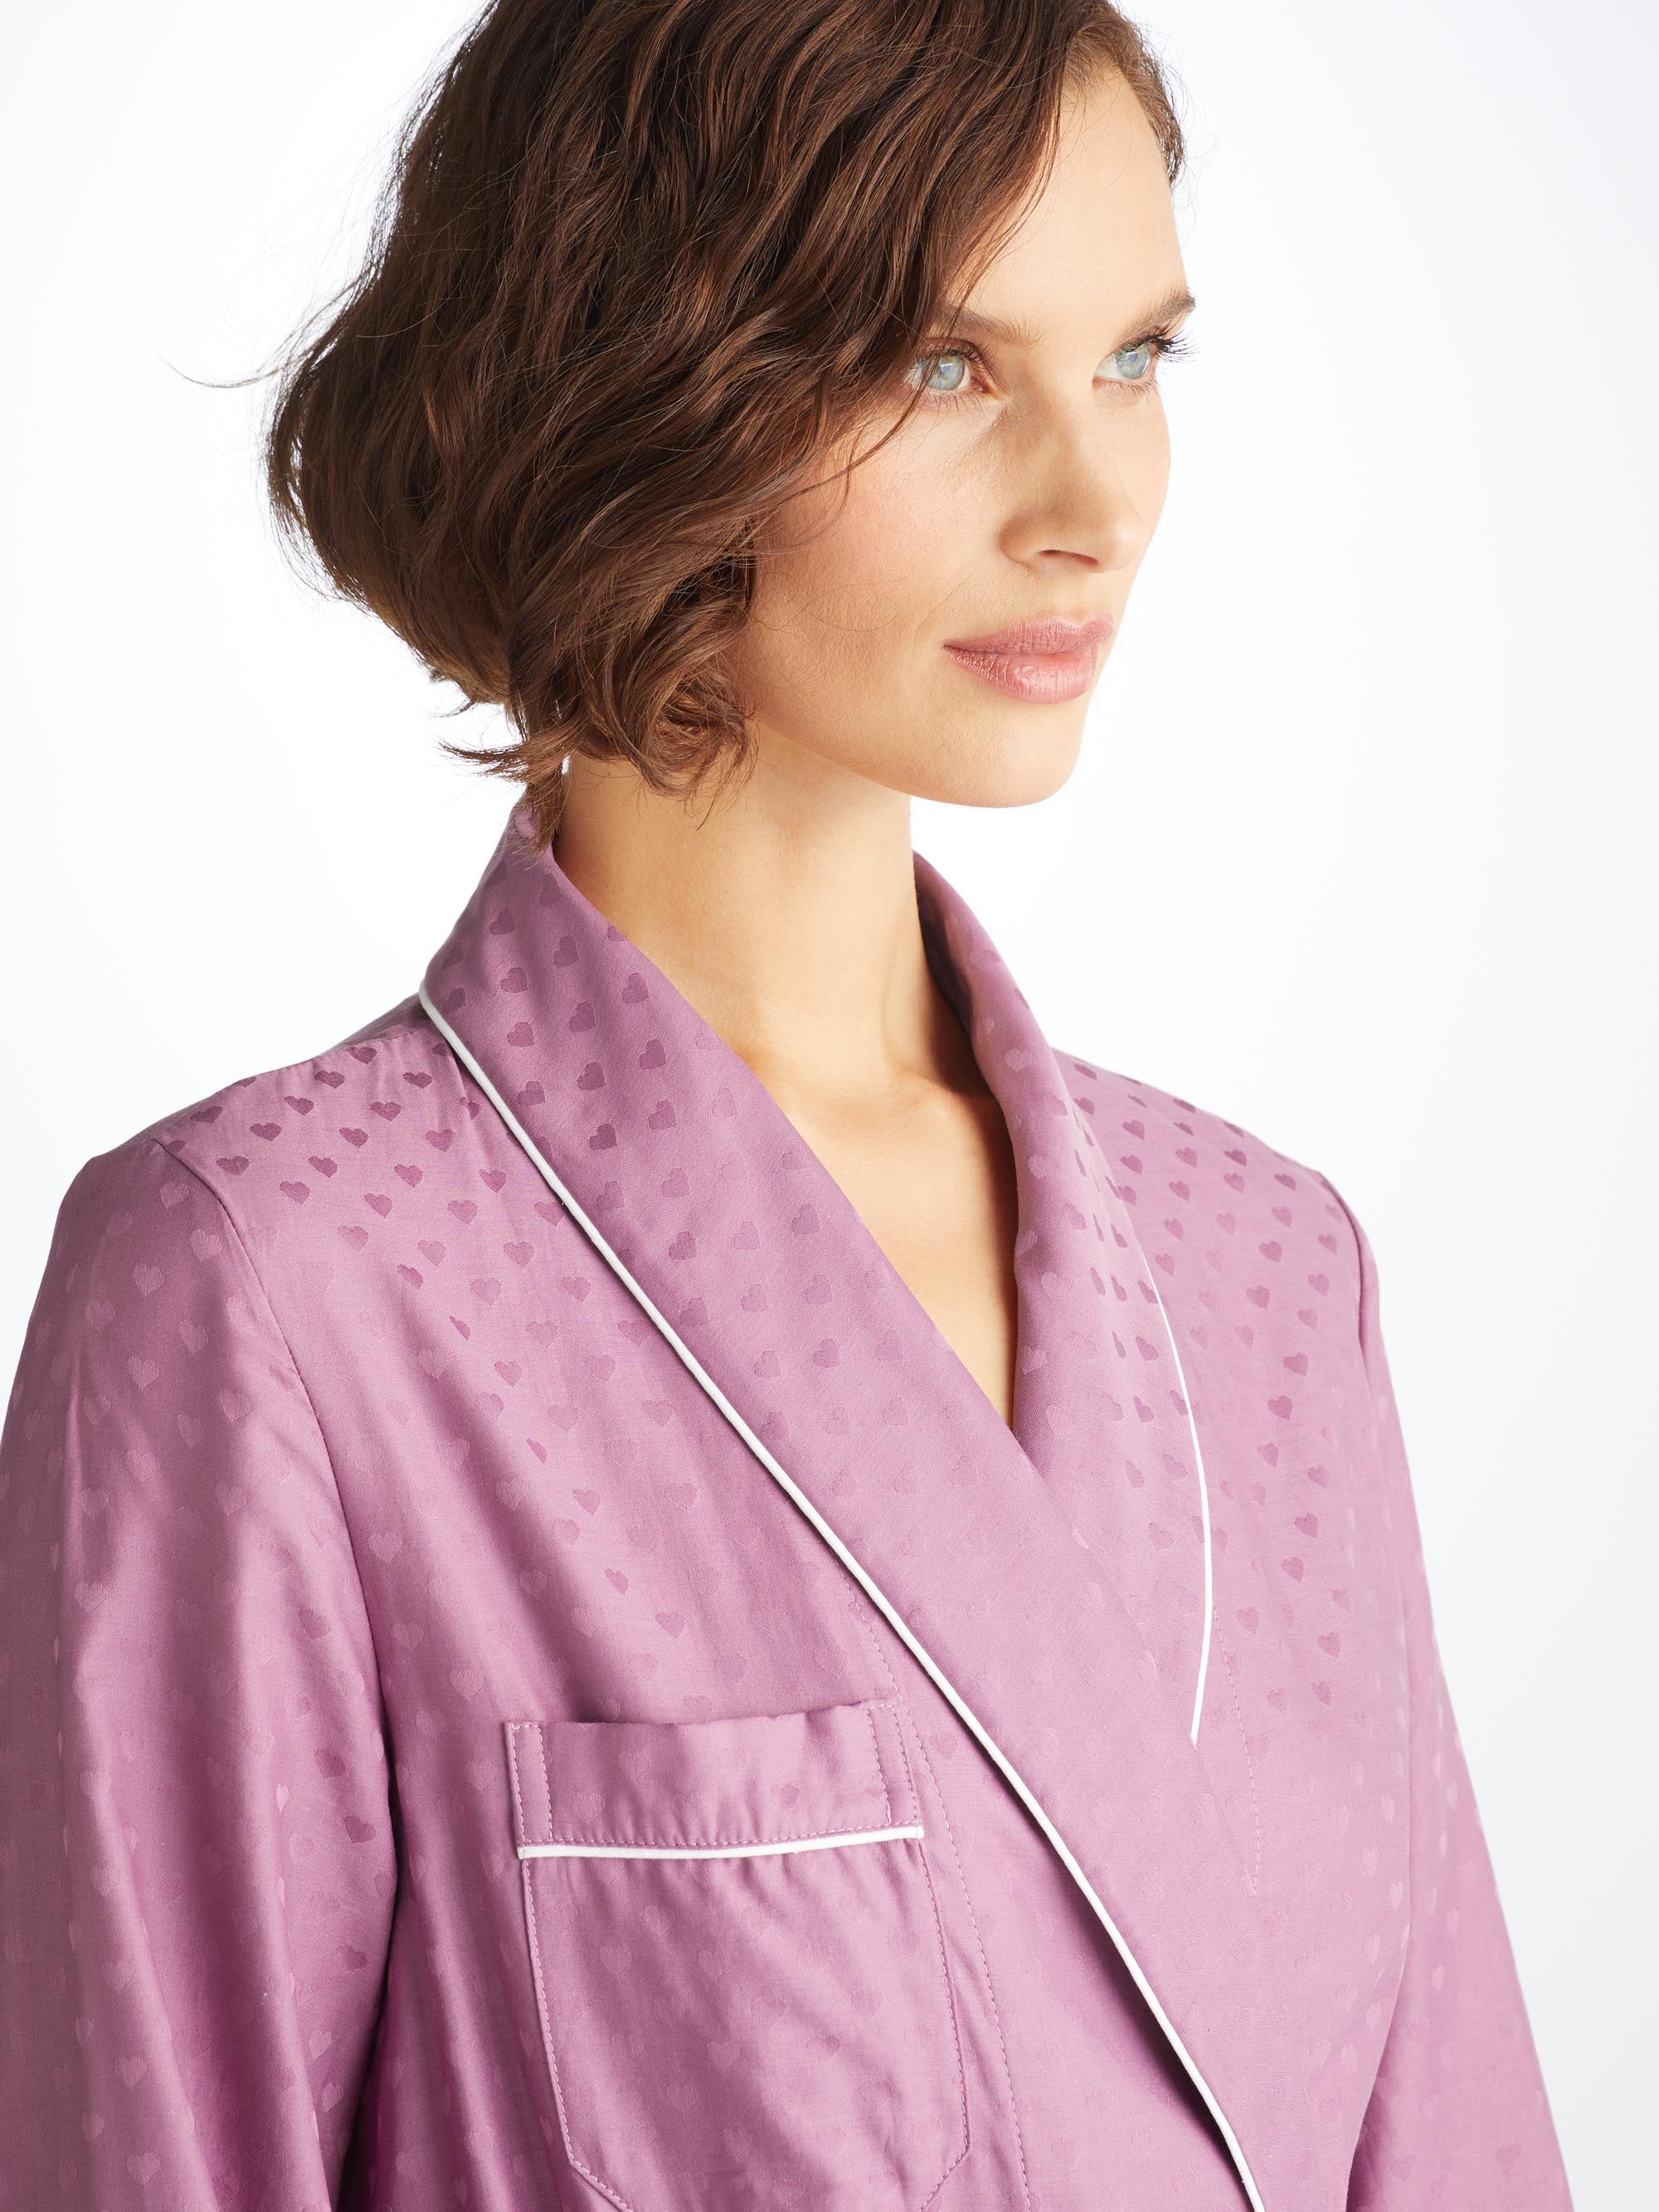 Women's Long Dressing Gown Kate 10 Cotton Jacquard Purple